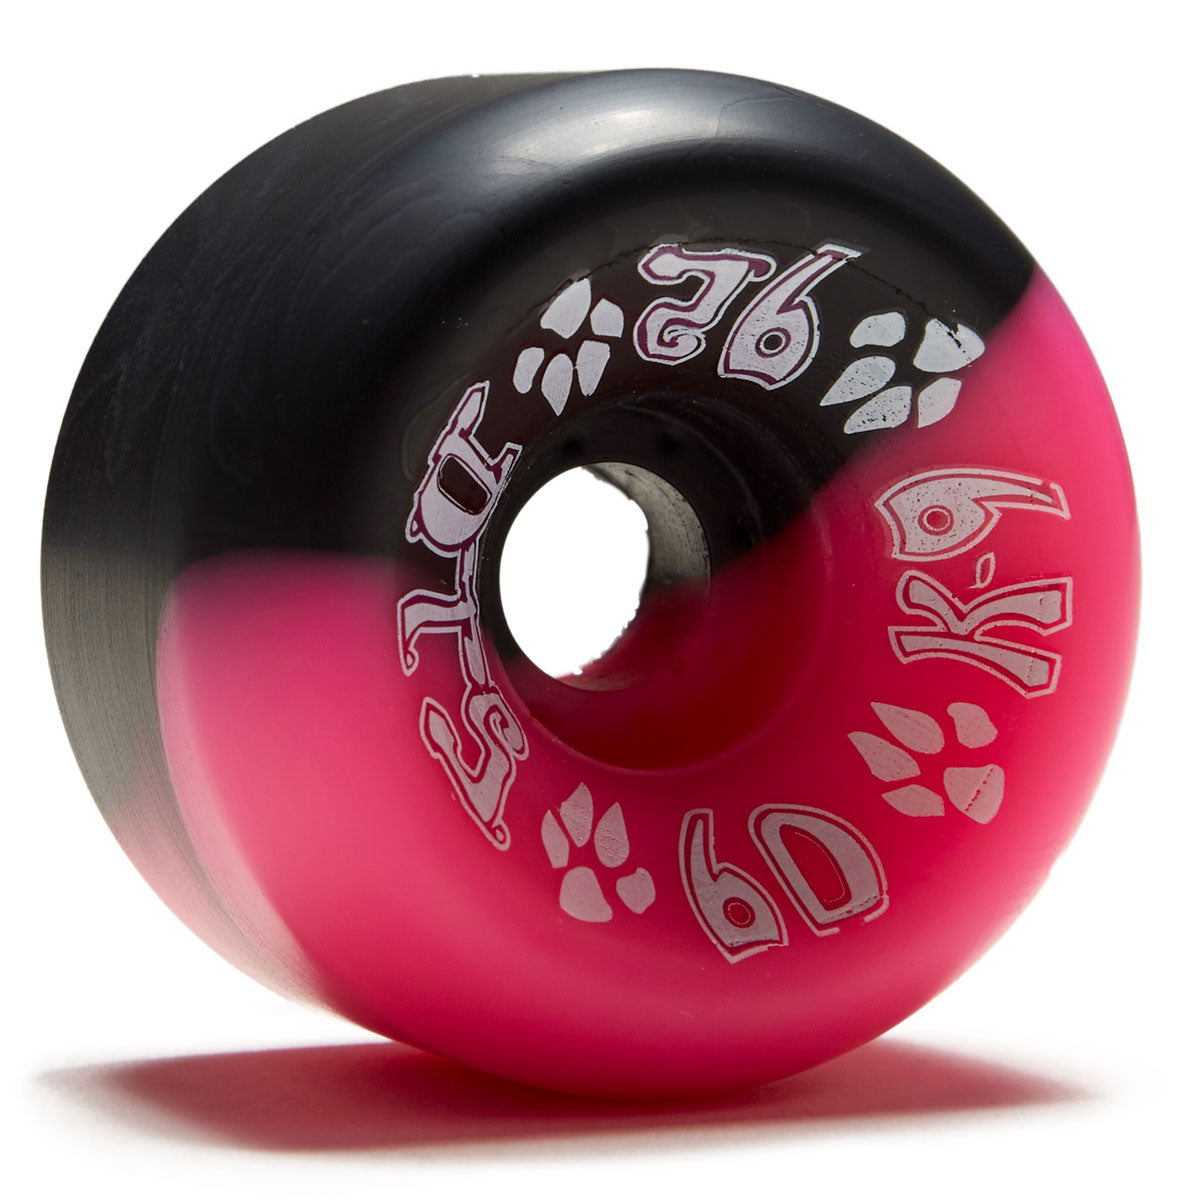 Dogtown K-9 92a Skateboard Wheels - Black/Pink - 60mm image 1